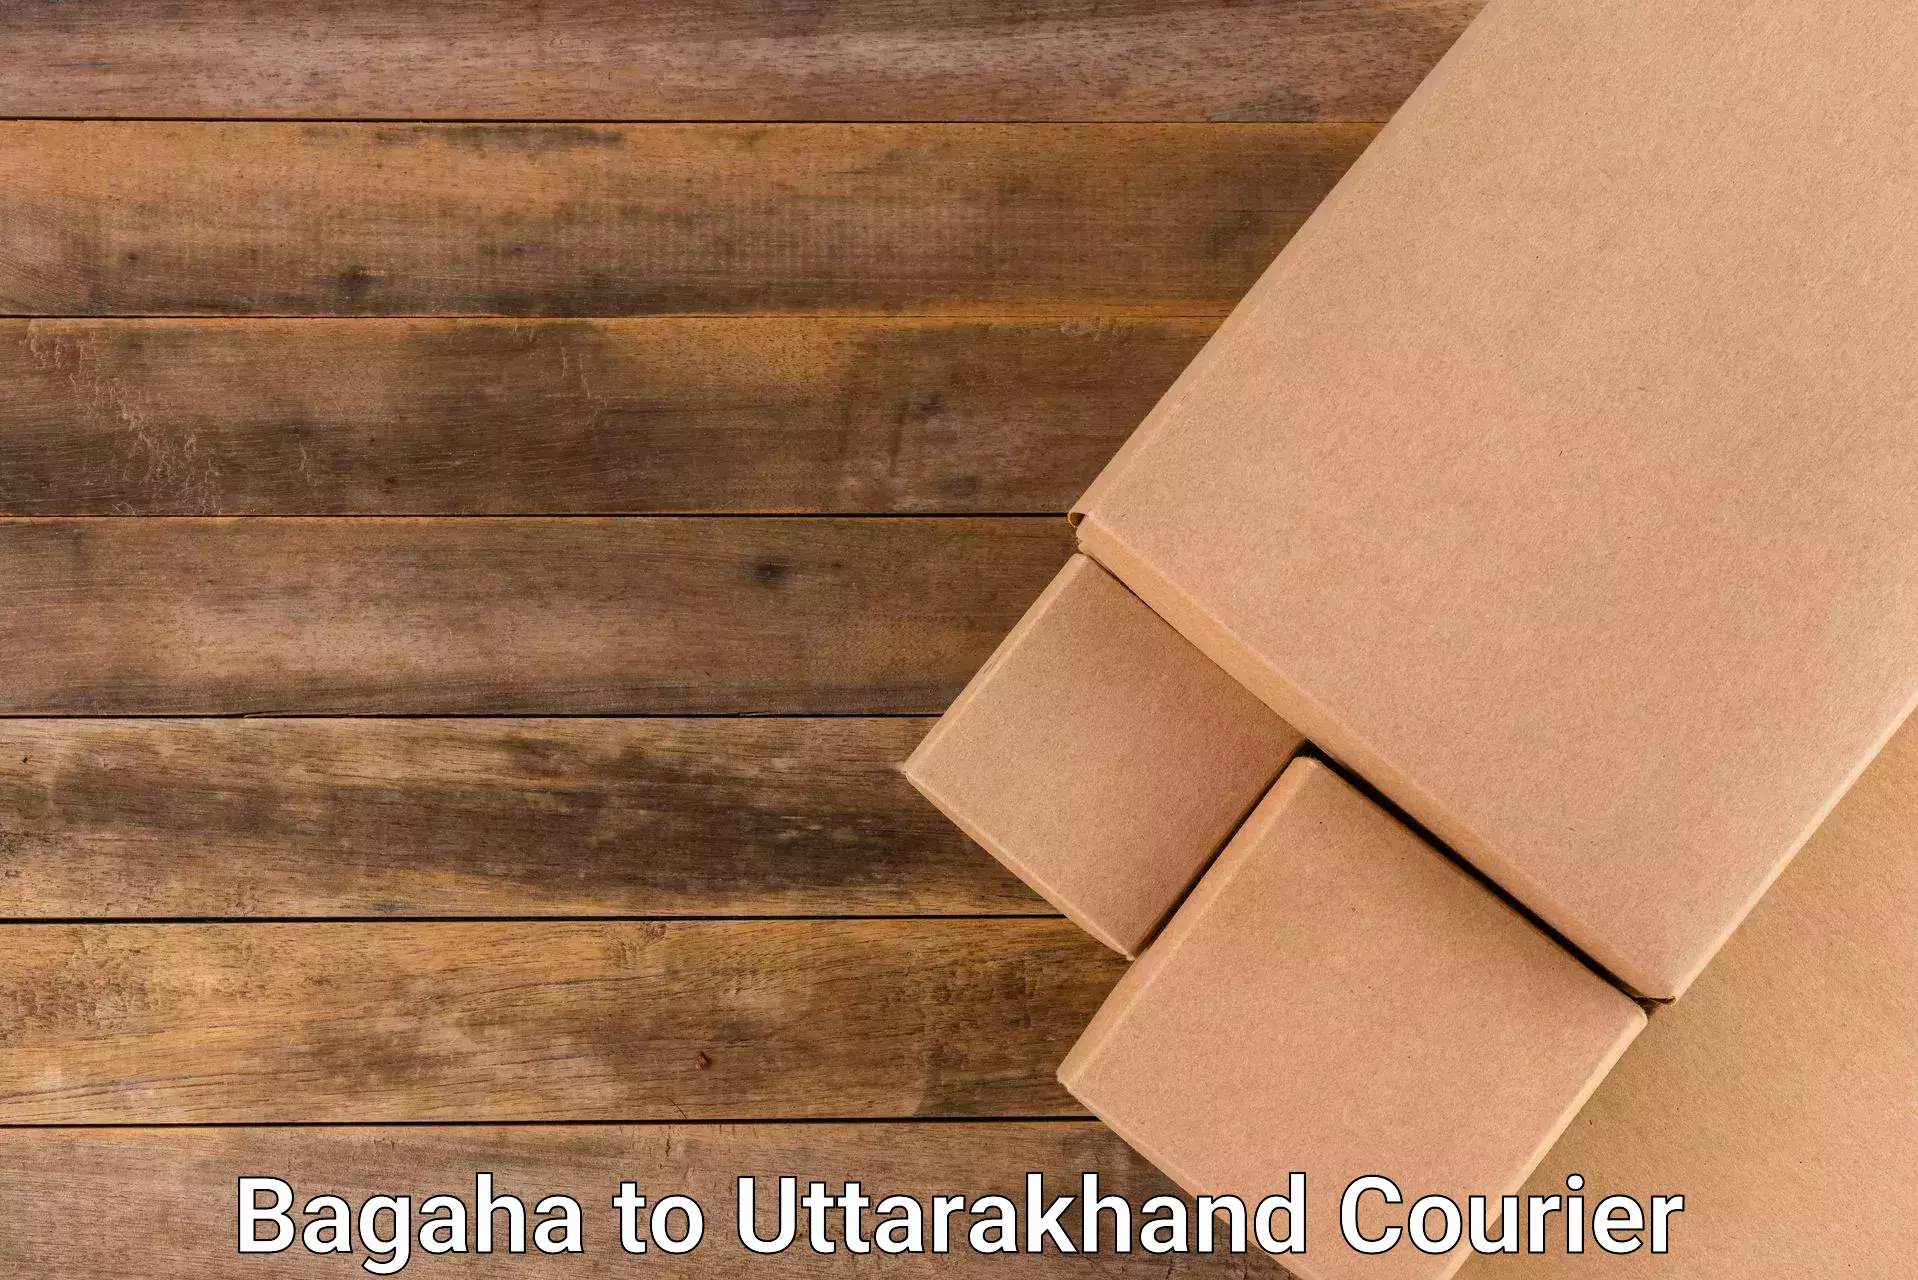 Courier service partnerships Bagaha to Rishikesh